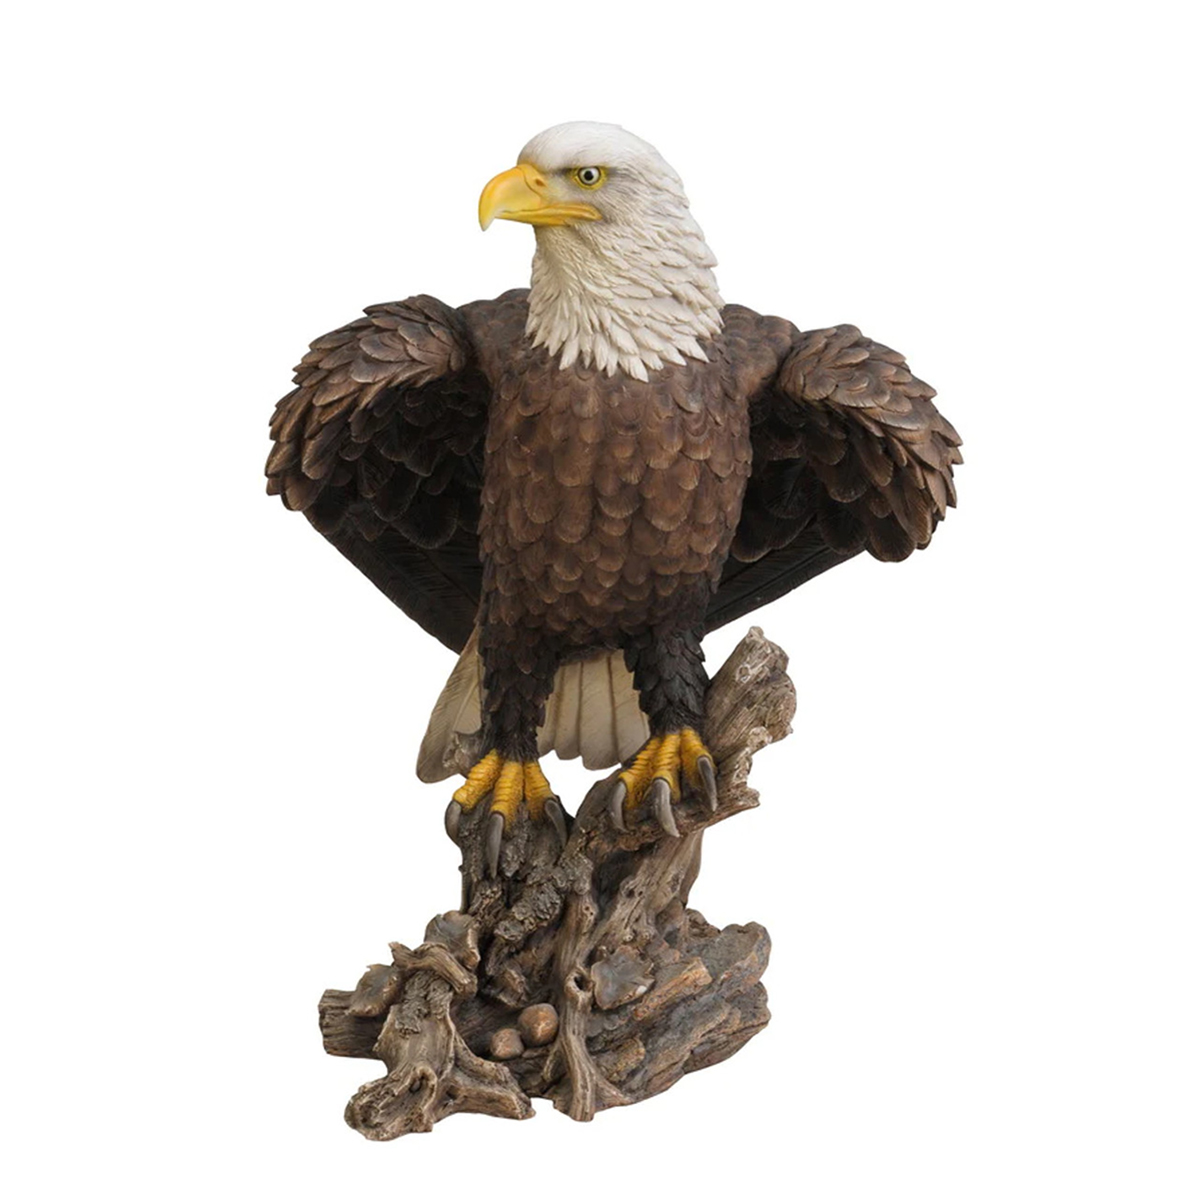 Bald Eagle Statues for Sale